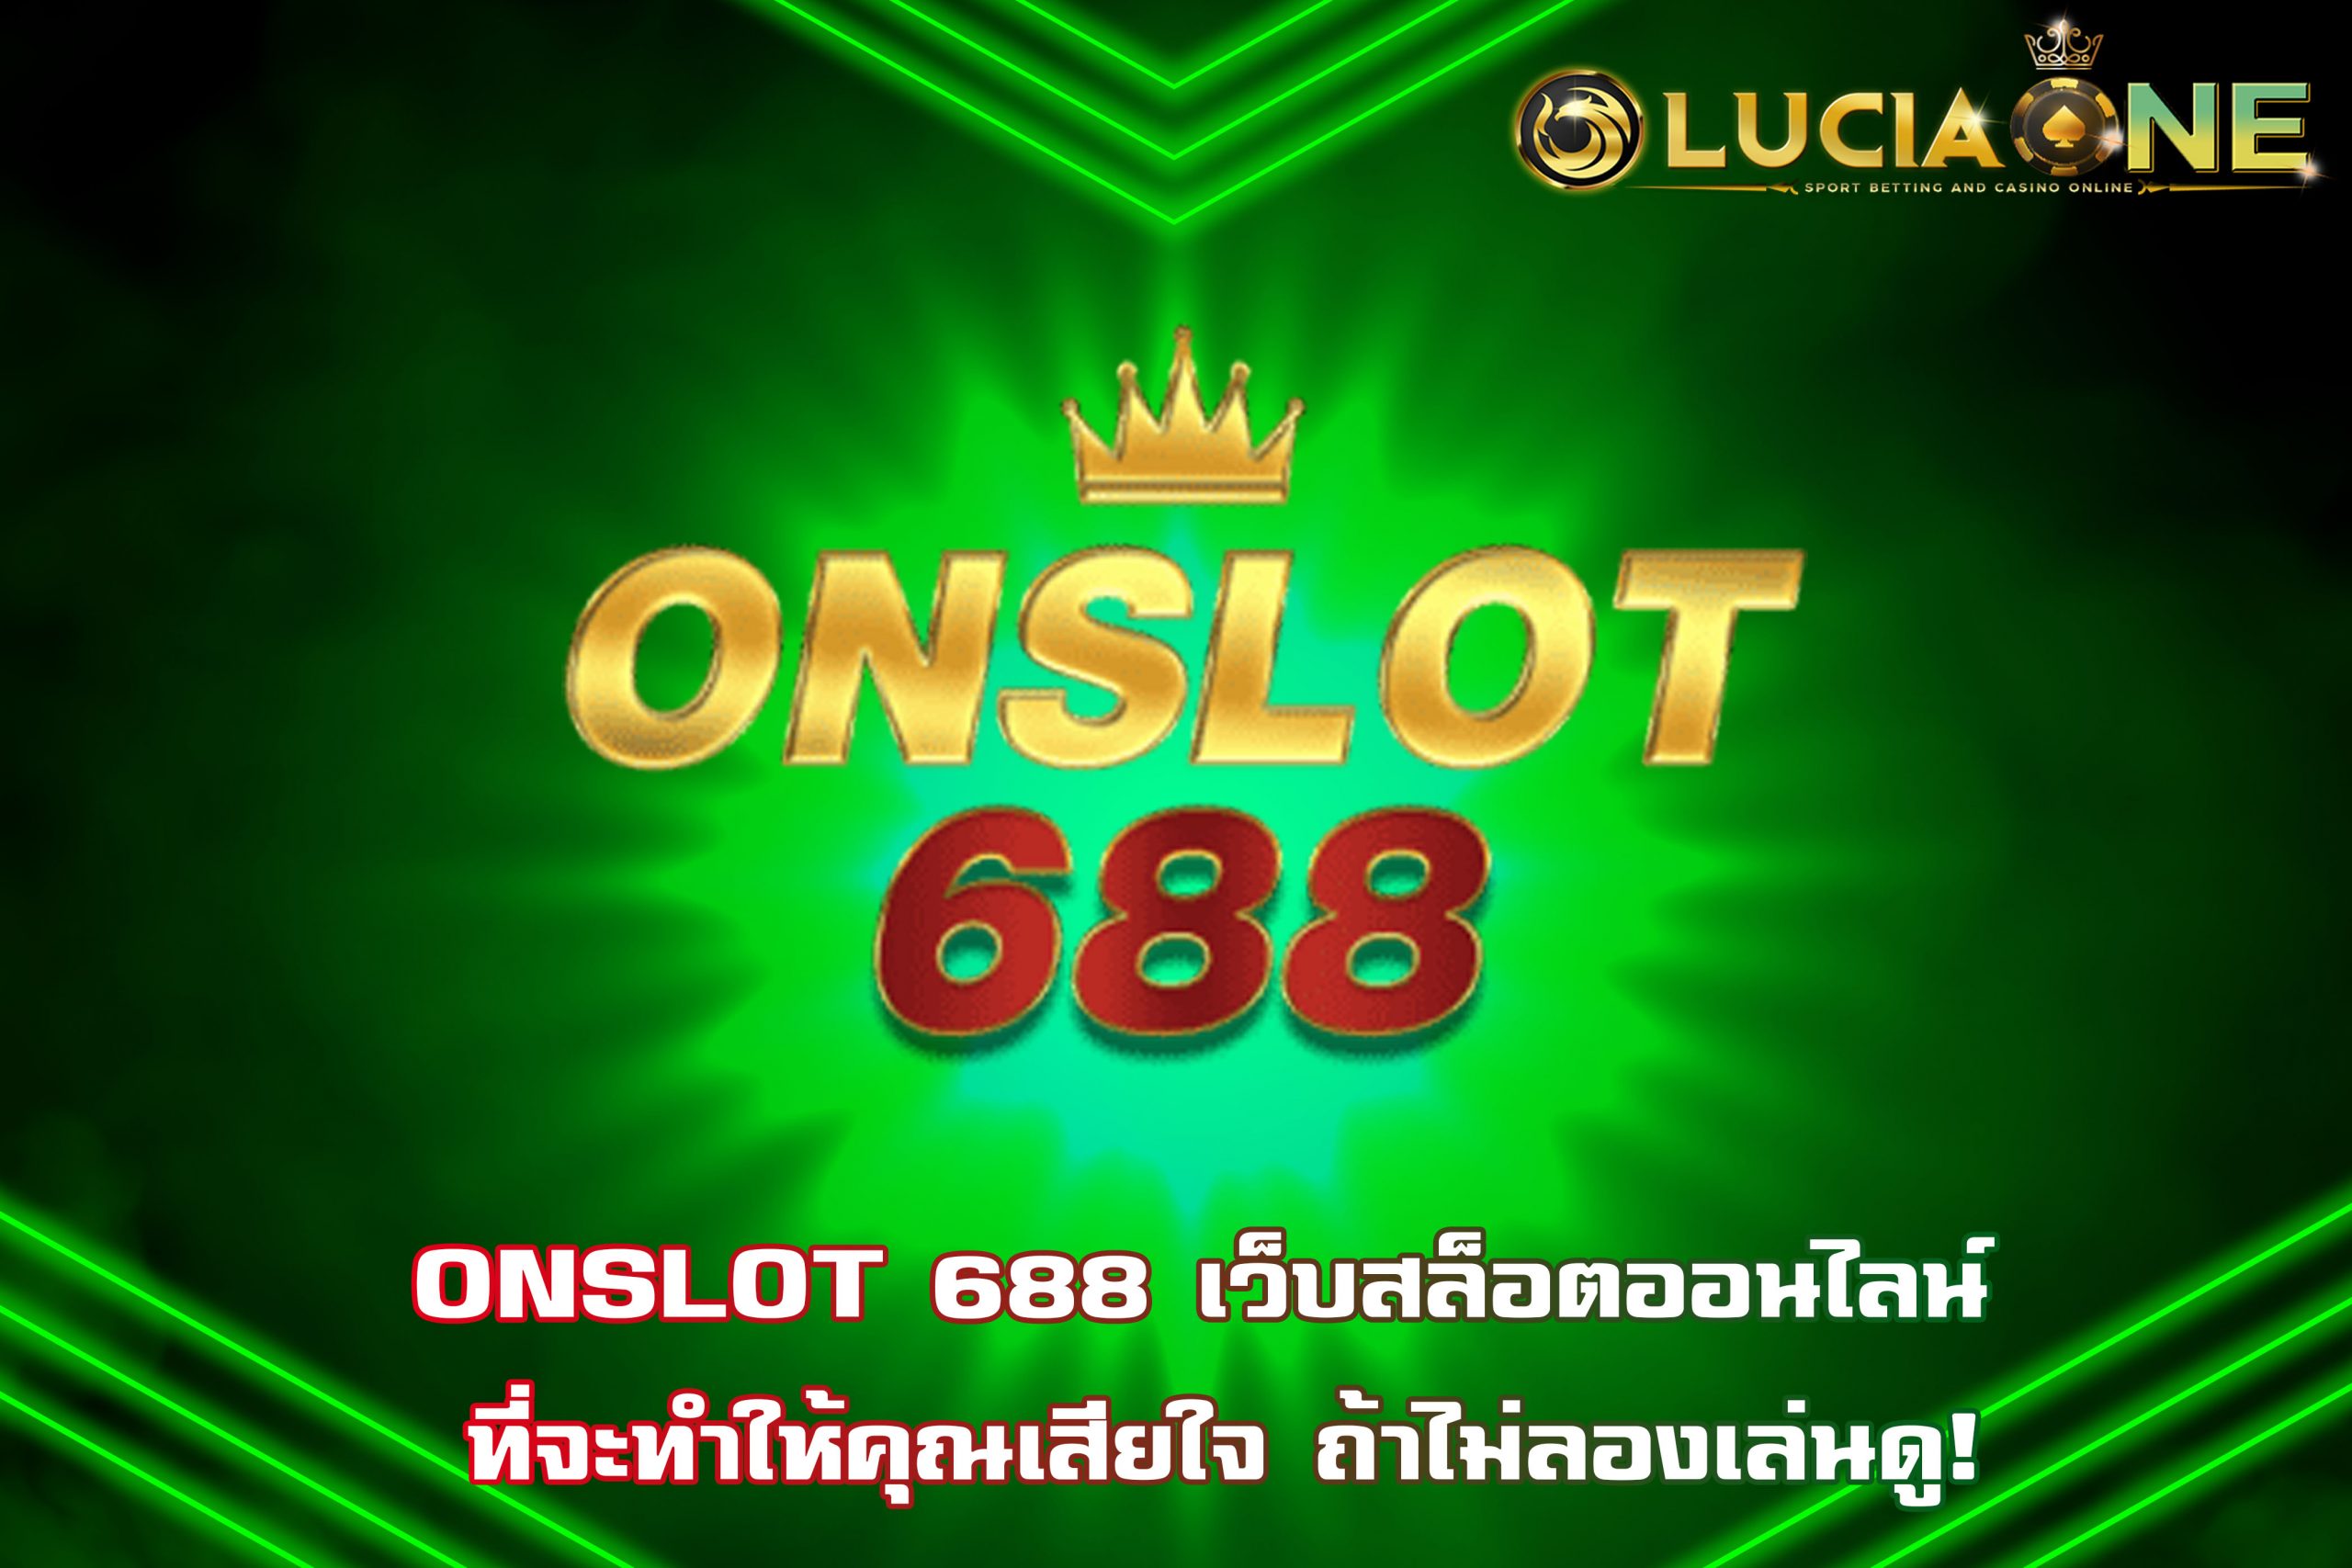 ONSLOT 688 เว็บสล็อตออนไลน์ ที่จะทำให้คุณเสียใจ ถ้าไม่ลองเล่นดู!